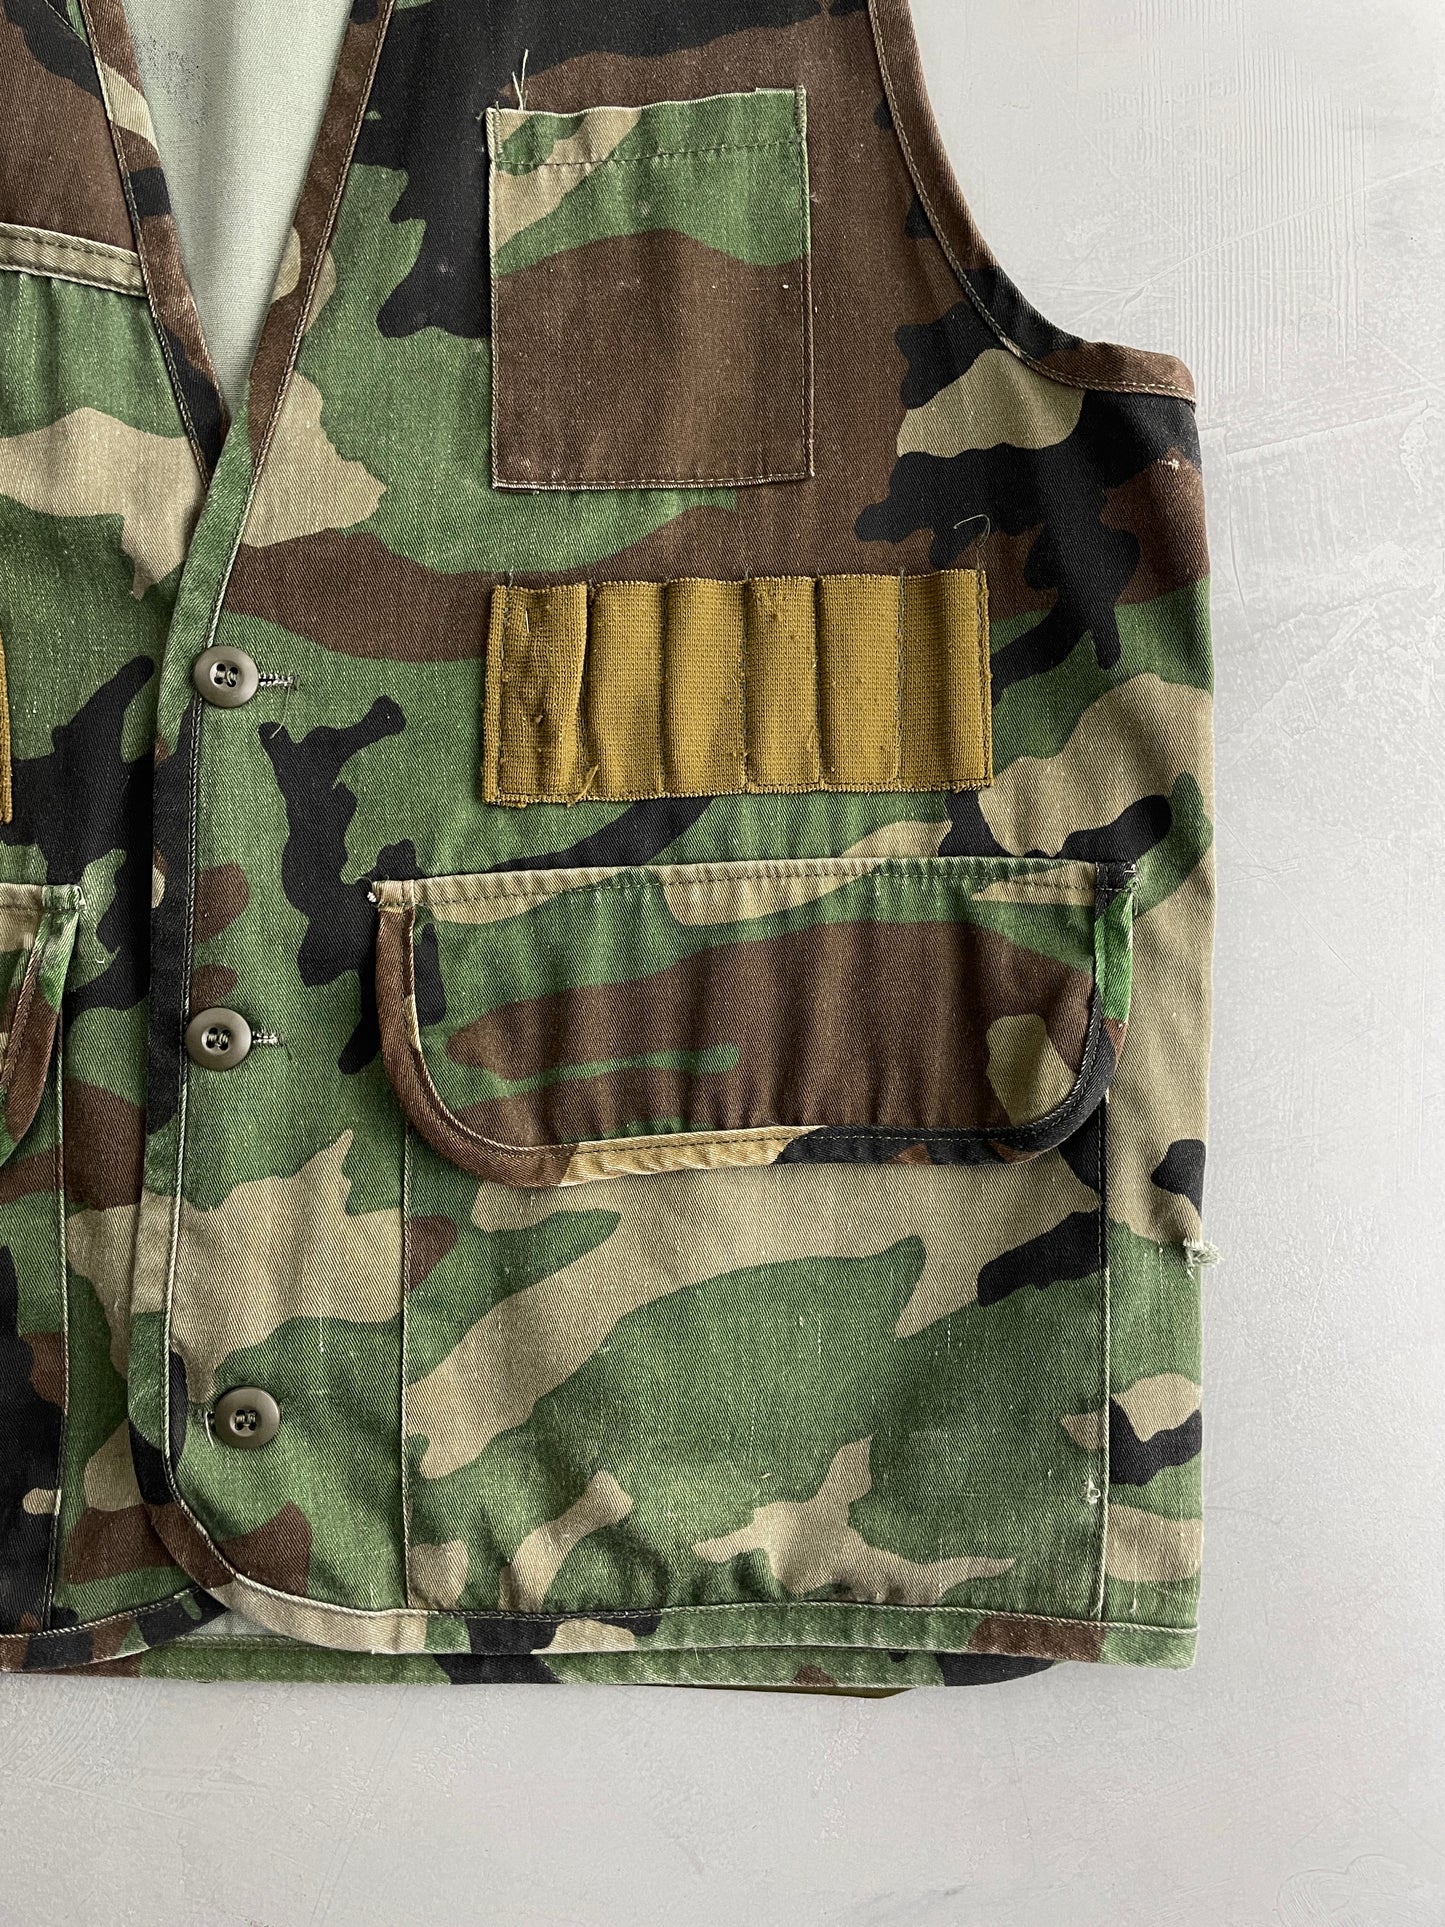 Saftbak Camo Hunting Vest [L/XL]